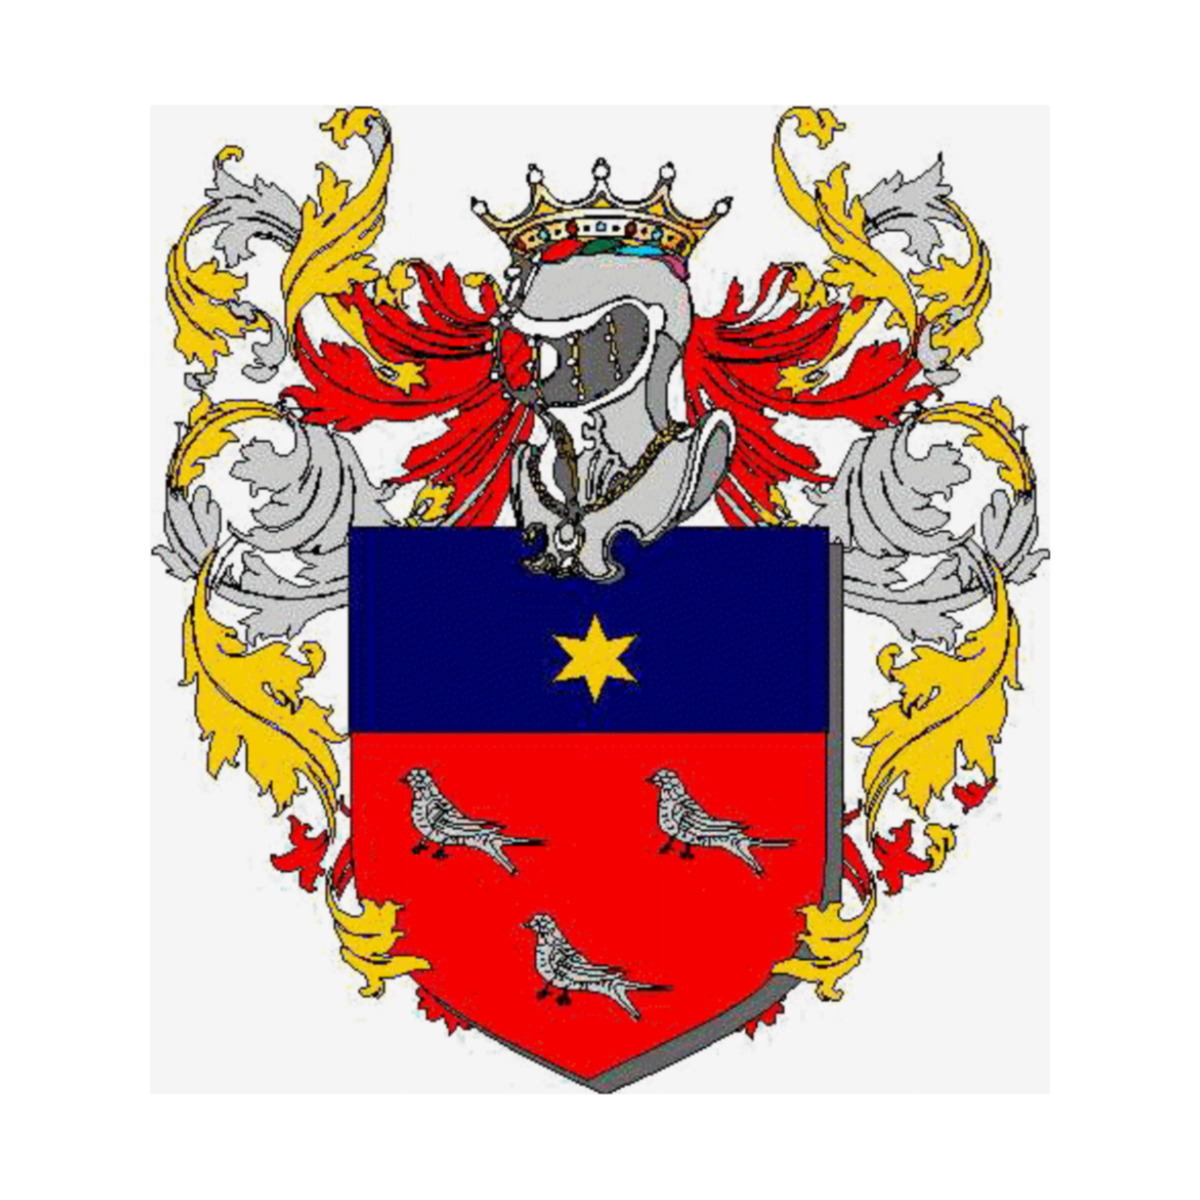 Escudo de la familiaBeraudo, Carnin de Vinderhoute,Carnino